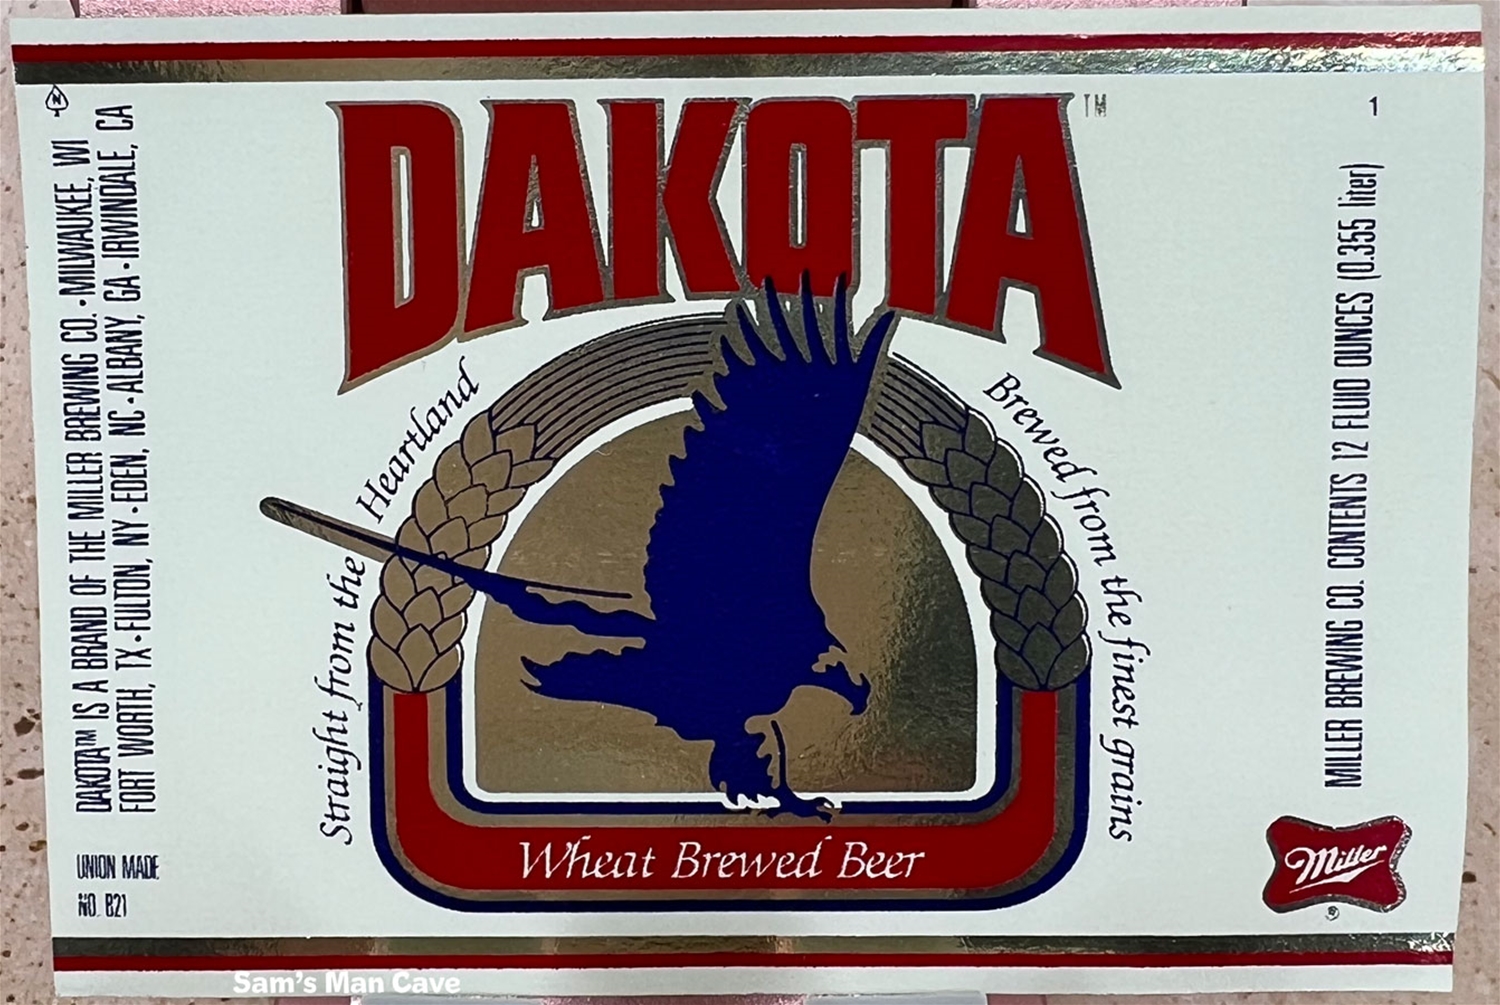 Dakota Beer Label by Miller